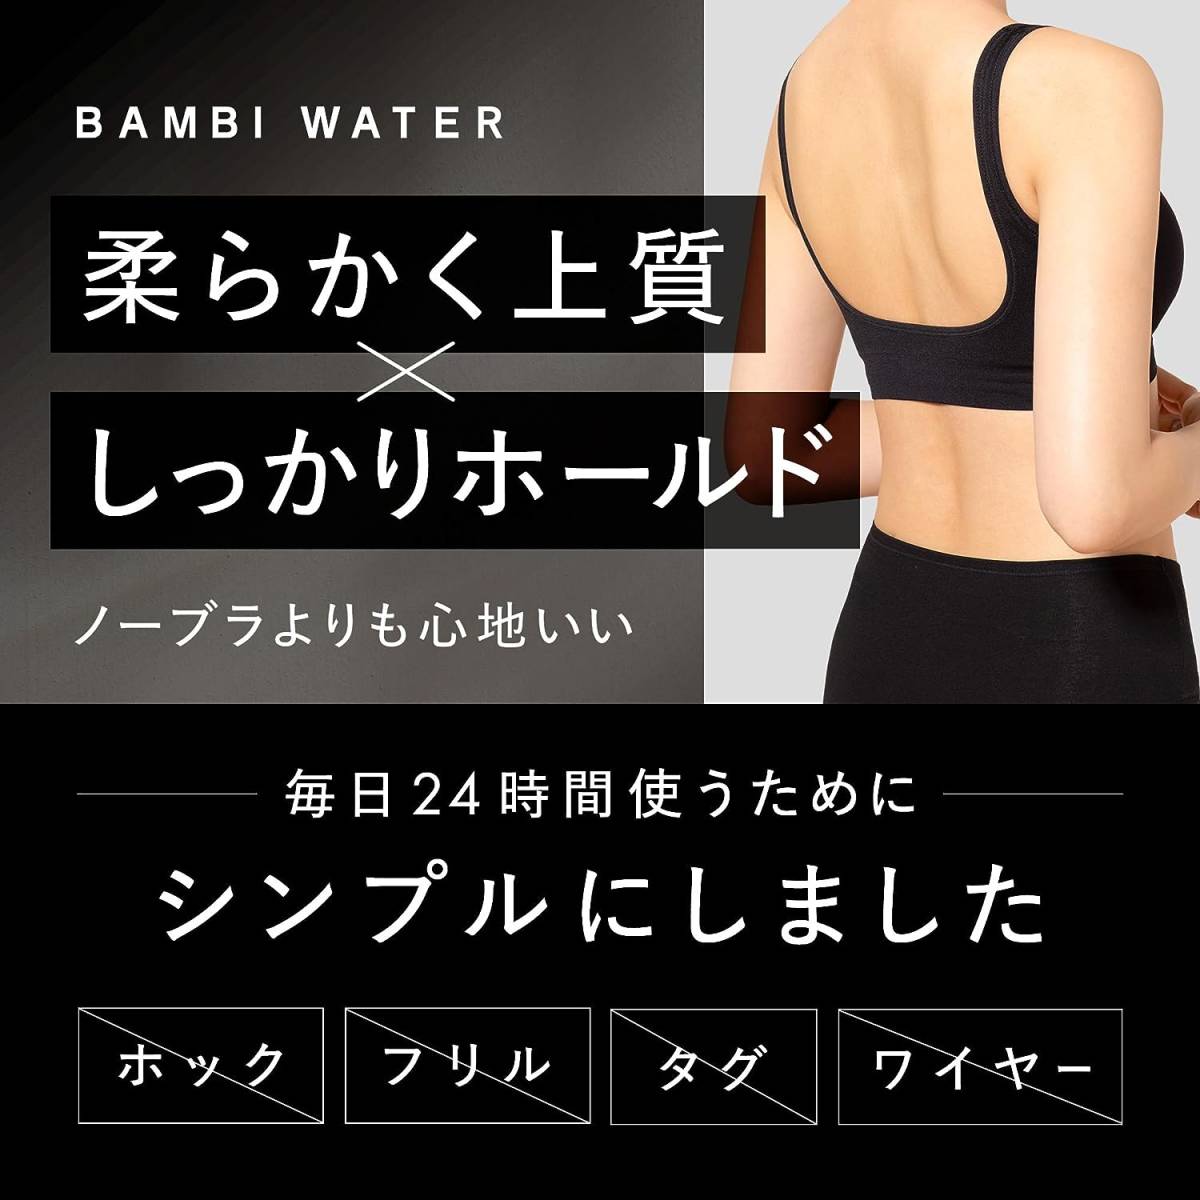 BAMBI WATER スタイルナイトブラＵバック バックオープン 背中開き 美胸ブラ 24時間 昼夜兼用 ナイトブラ ブラジャー (ブラック,XS)